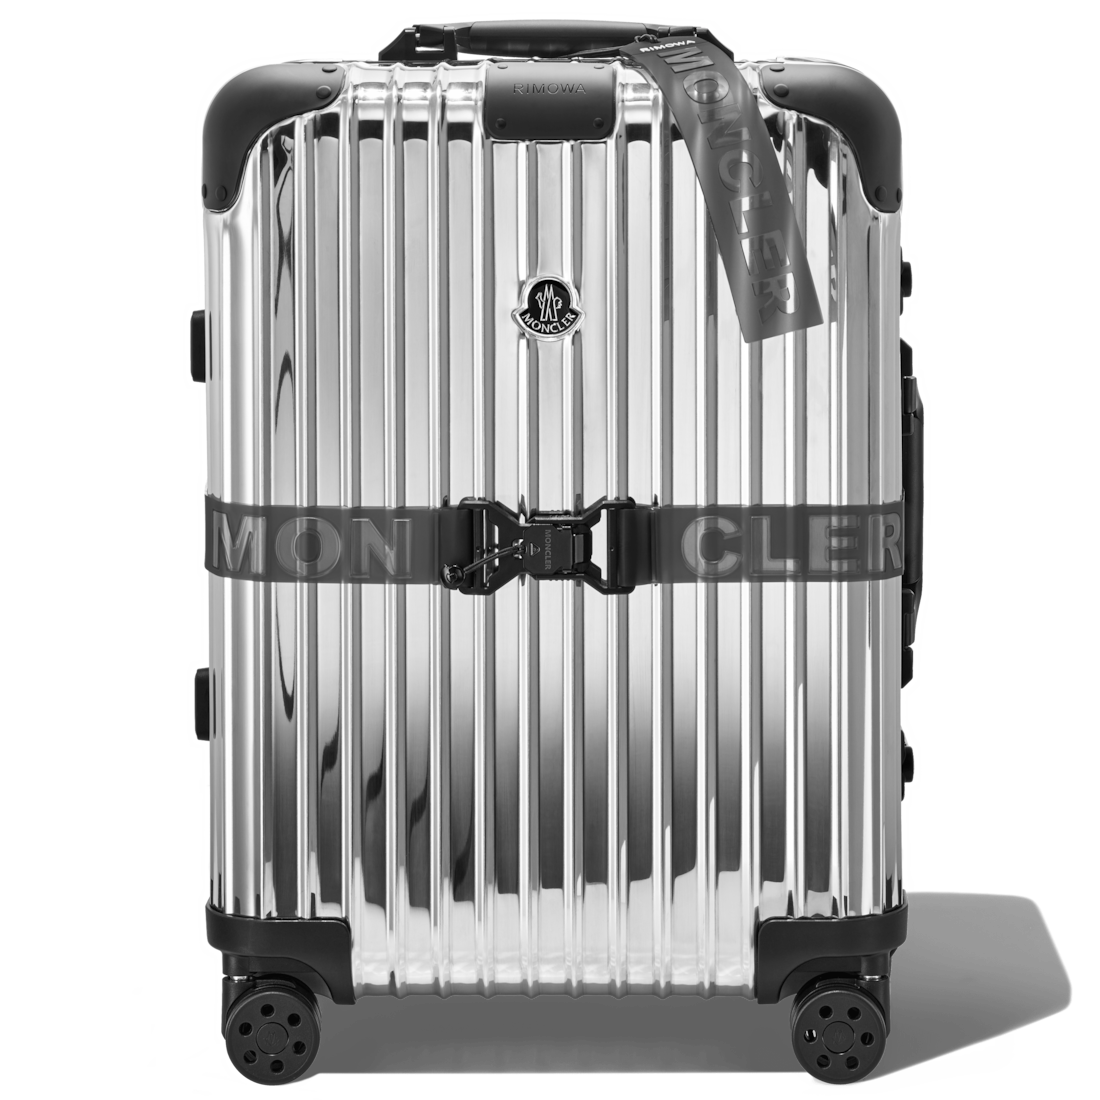 rimowa small luggage size